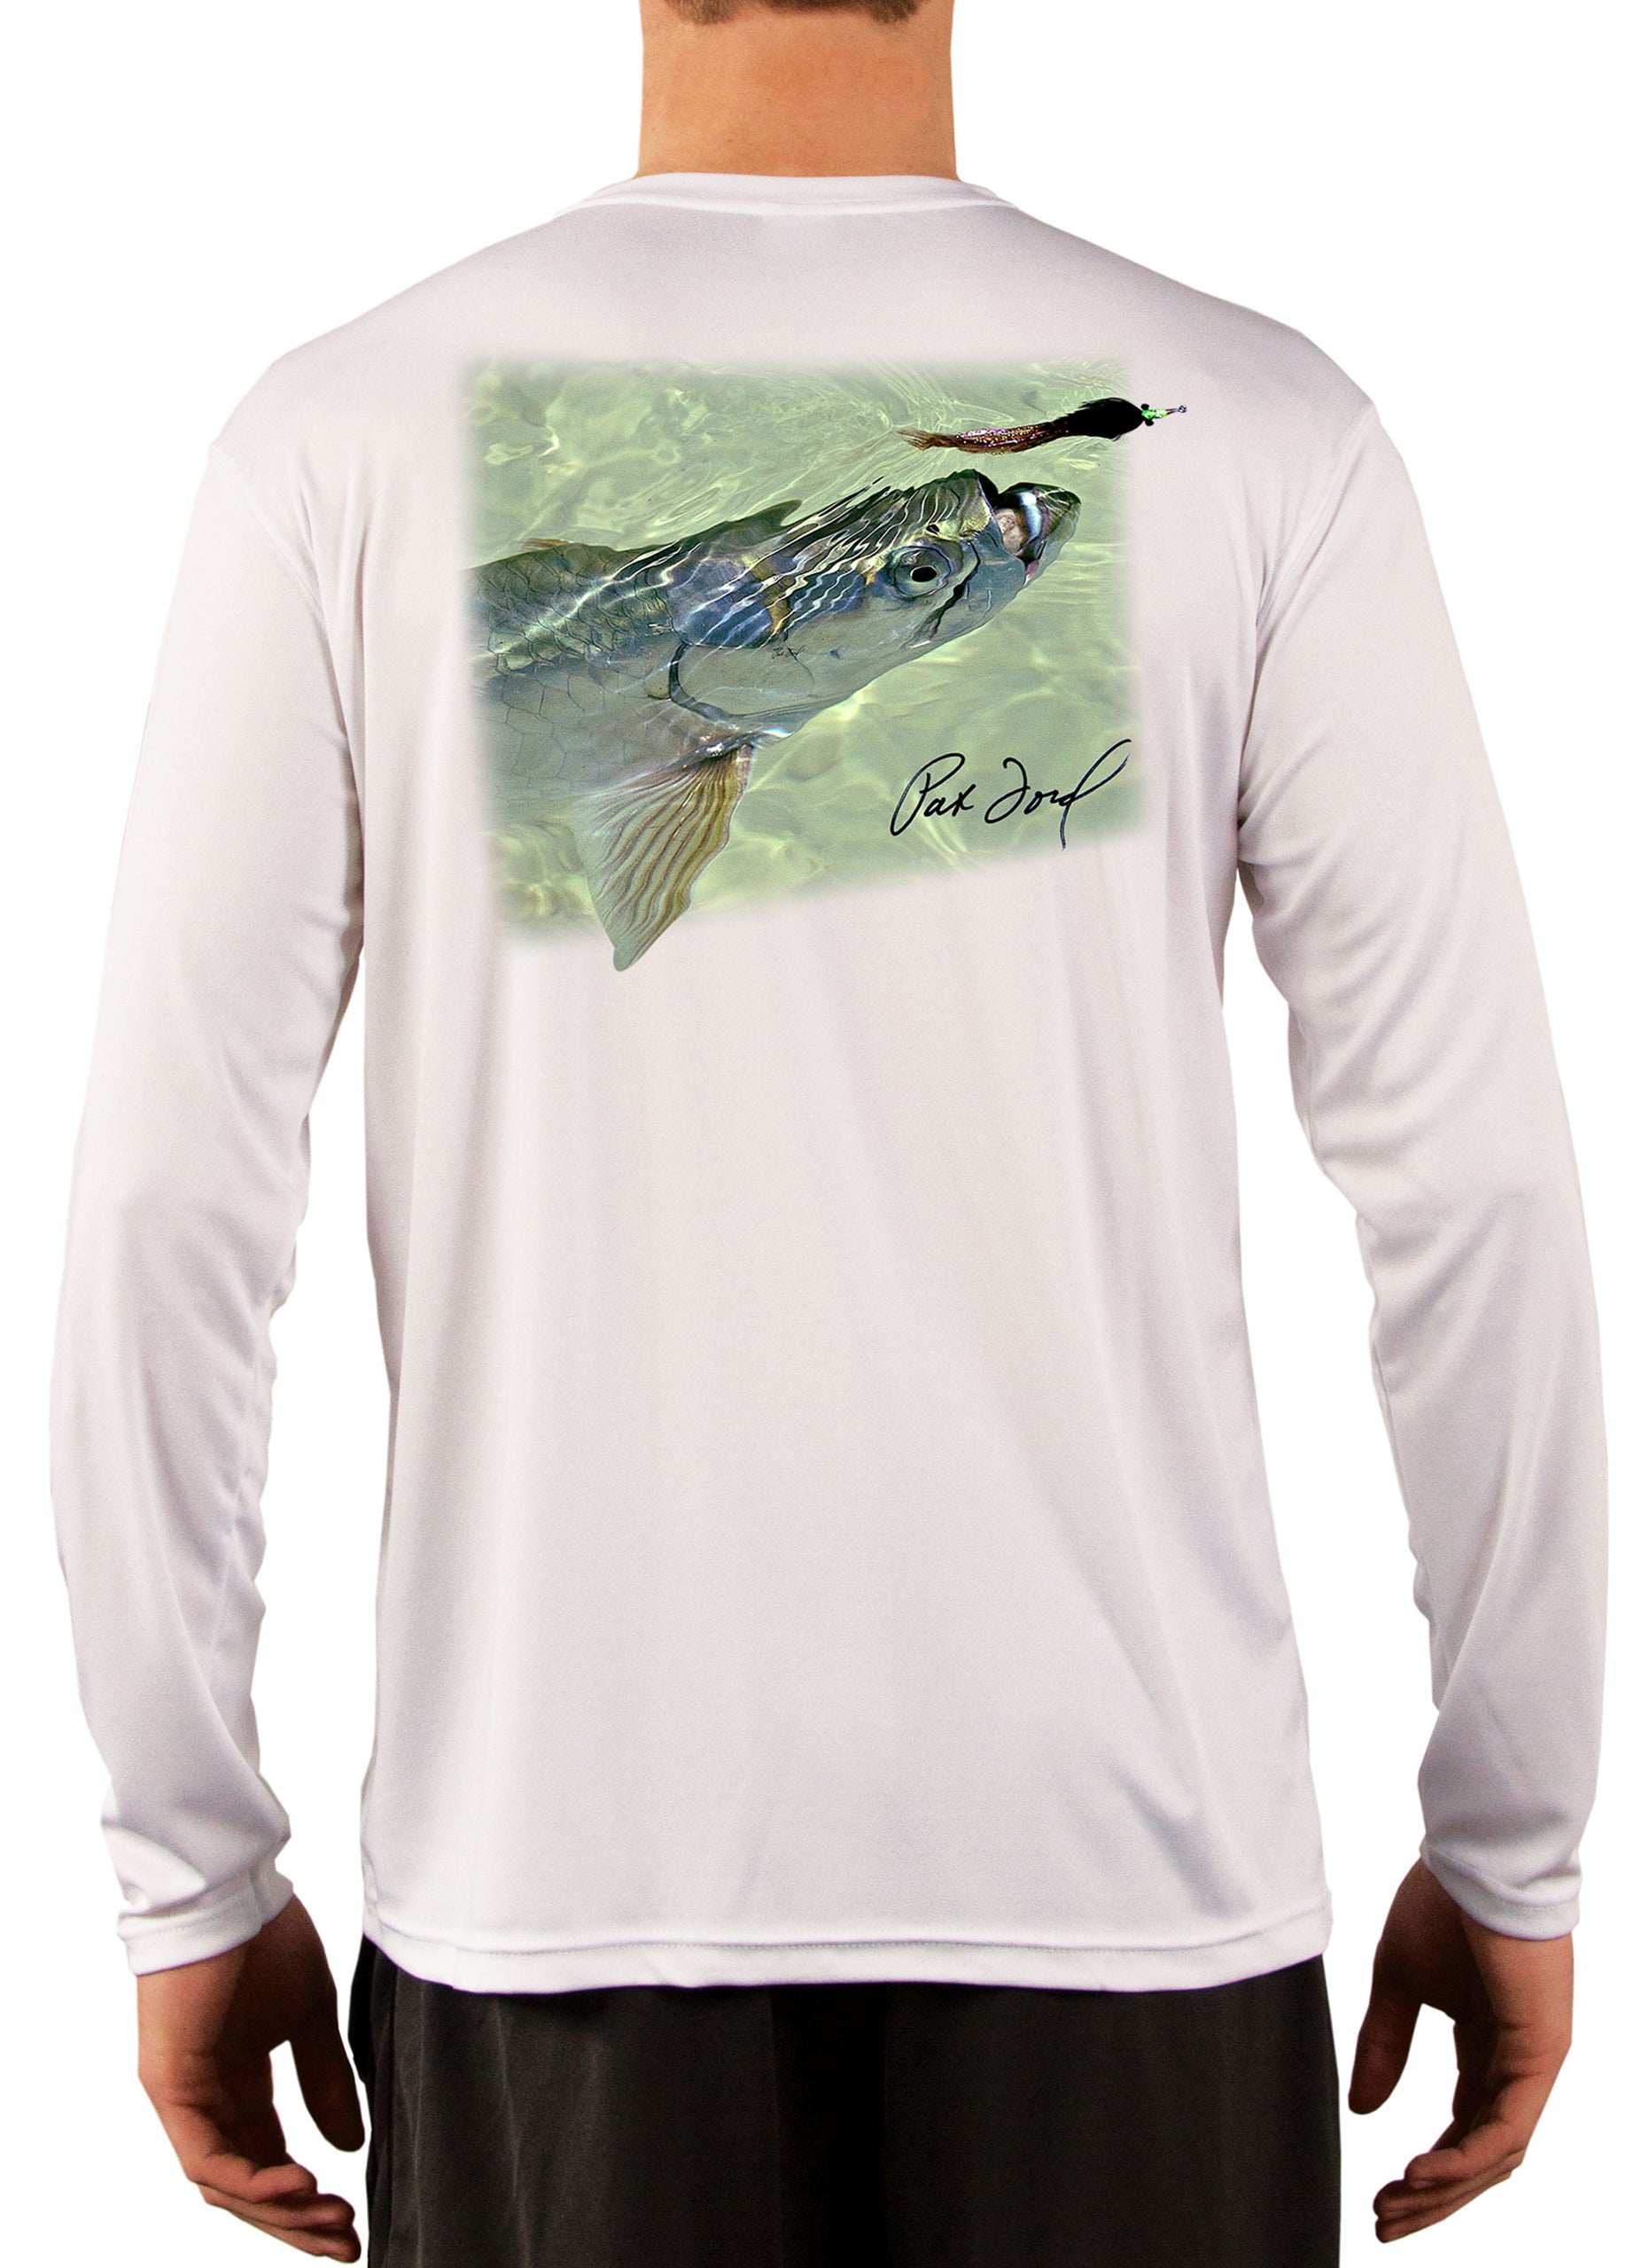 Tarpon Fly Fishing Shirt for Men by Pat Ford 3XL / White